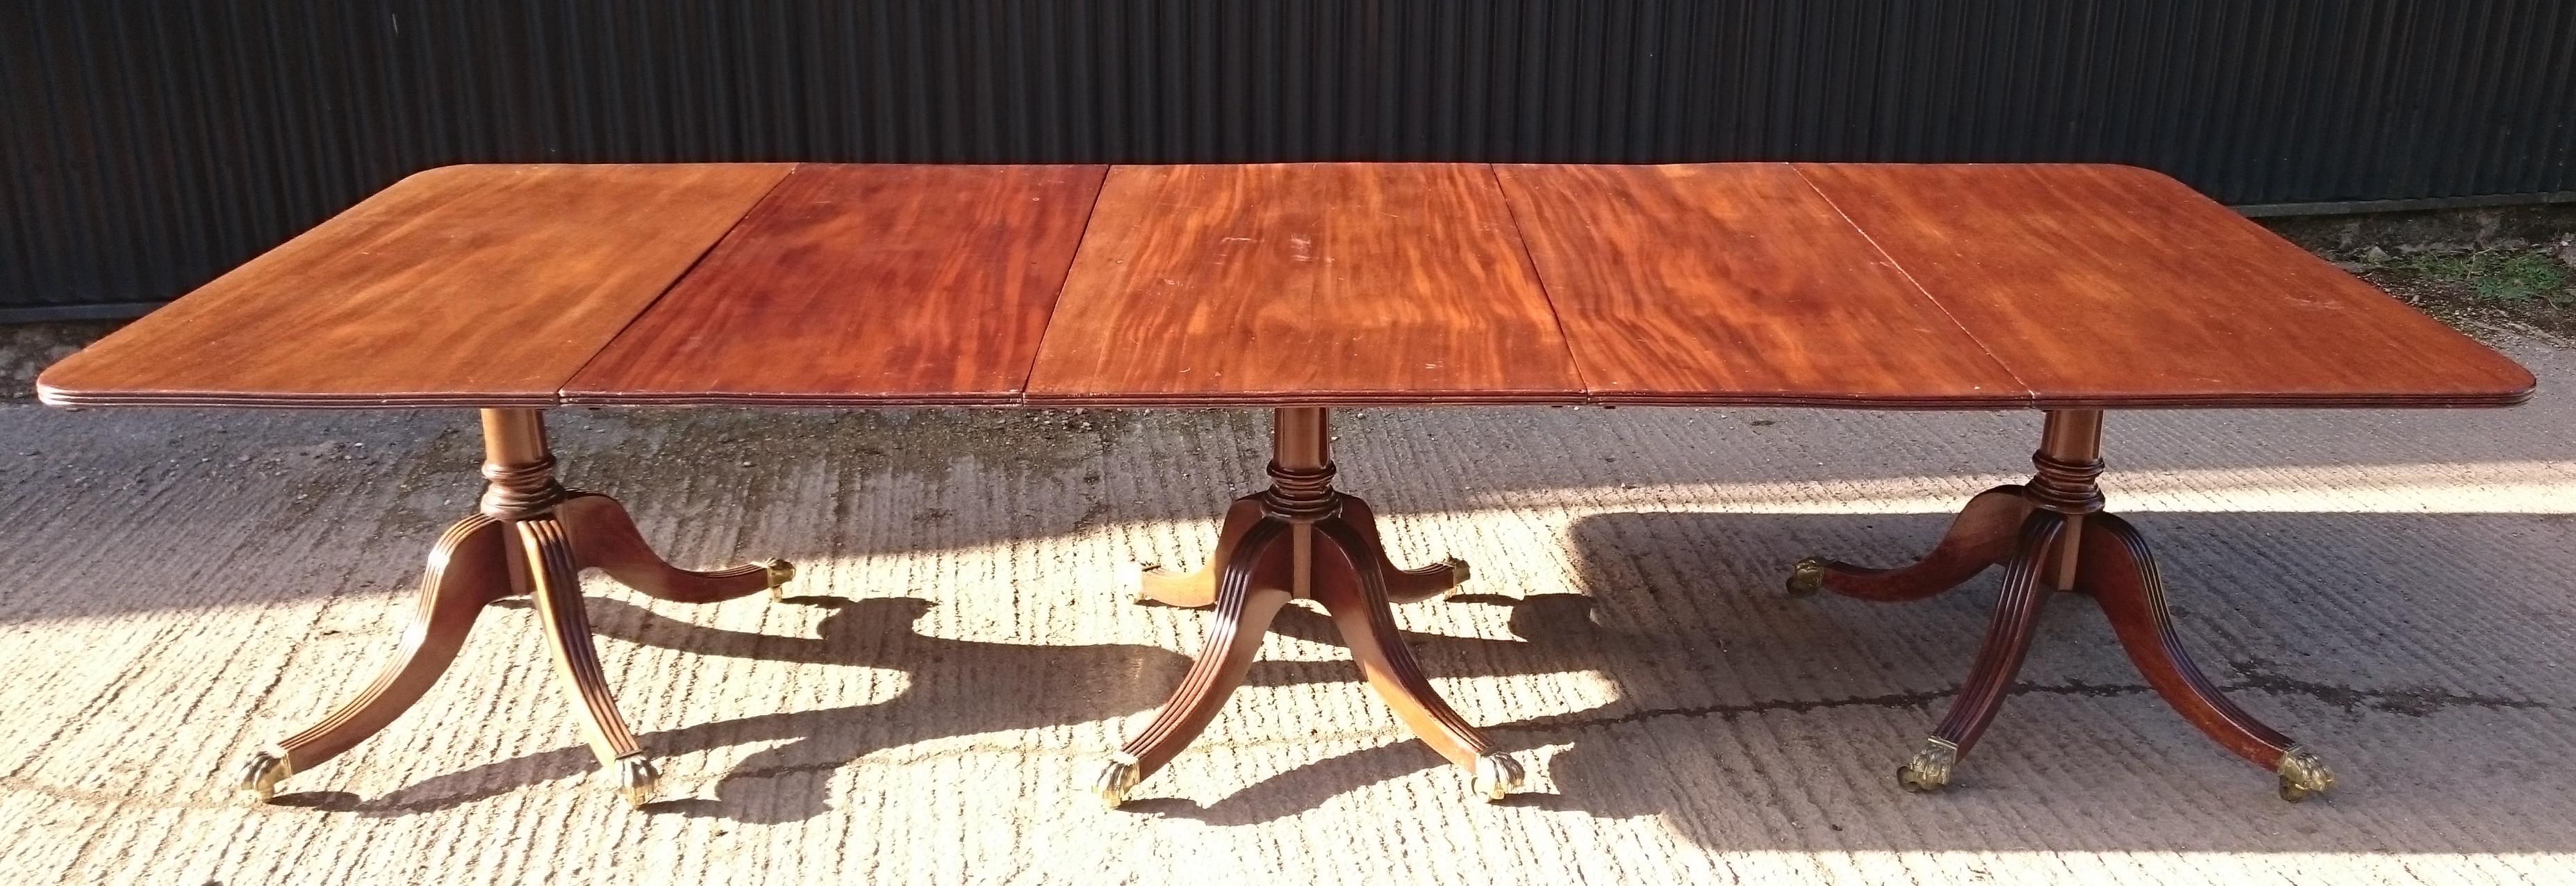 mahogany antique dining table